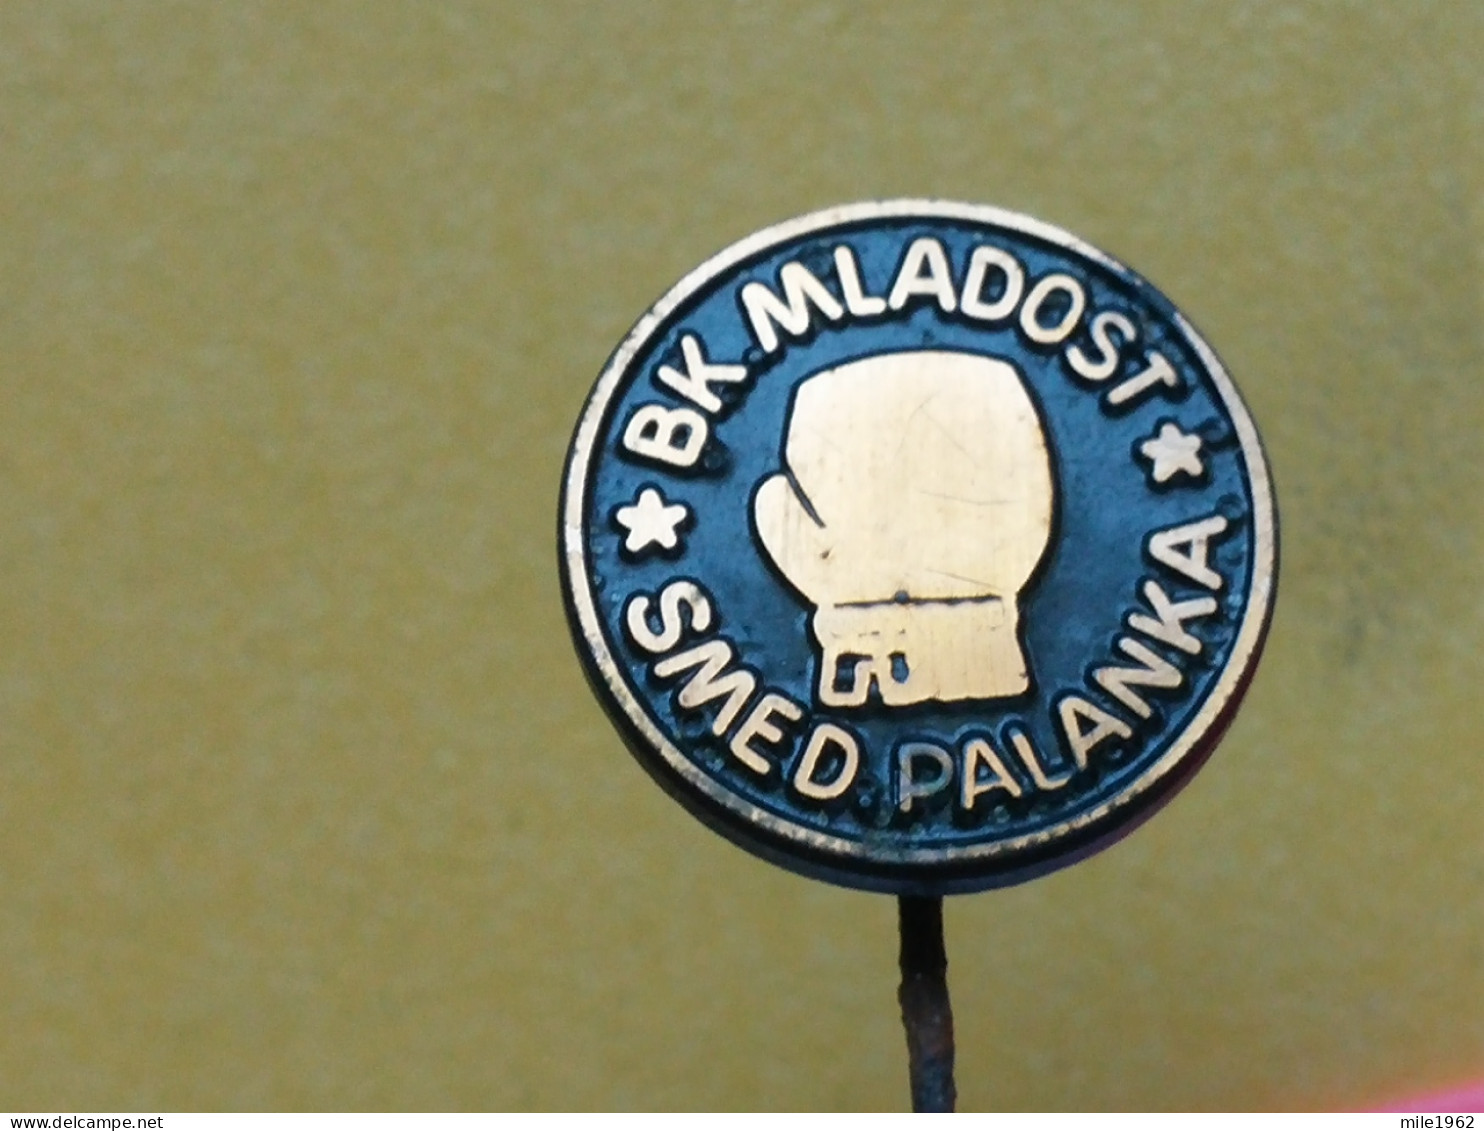 Badge Z-52-2 - BOX, BOXE CLUB MLADOST SMEDEREVSKA PALANKA, SERBIA - Boxen